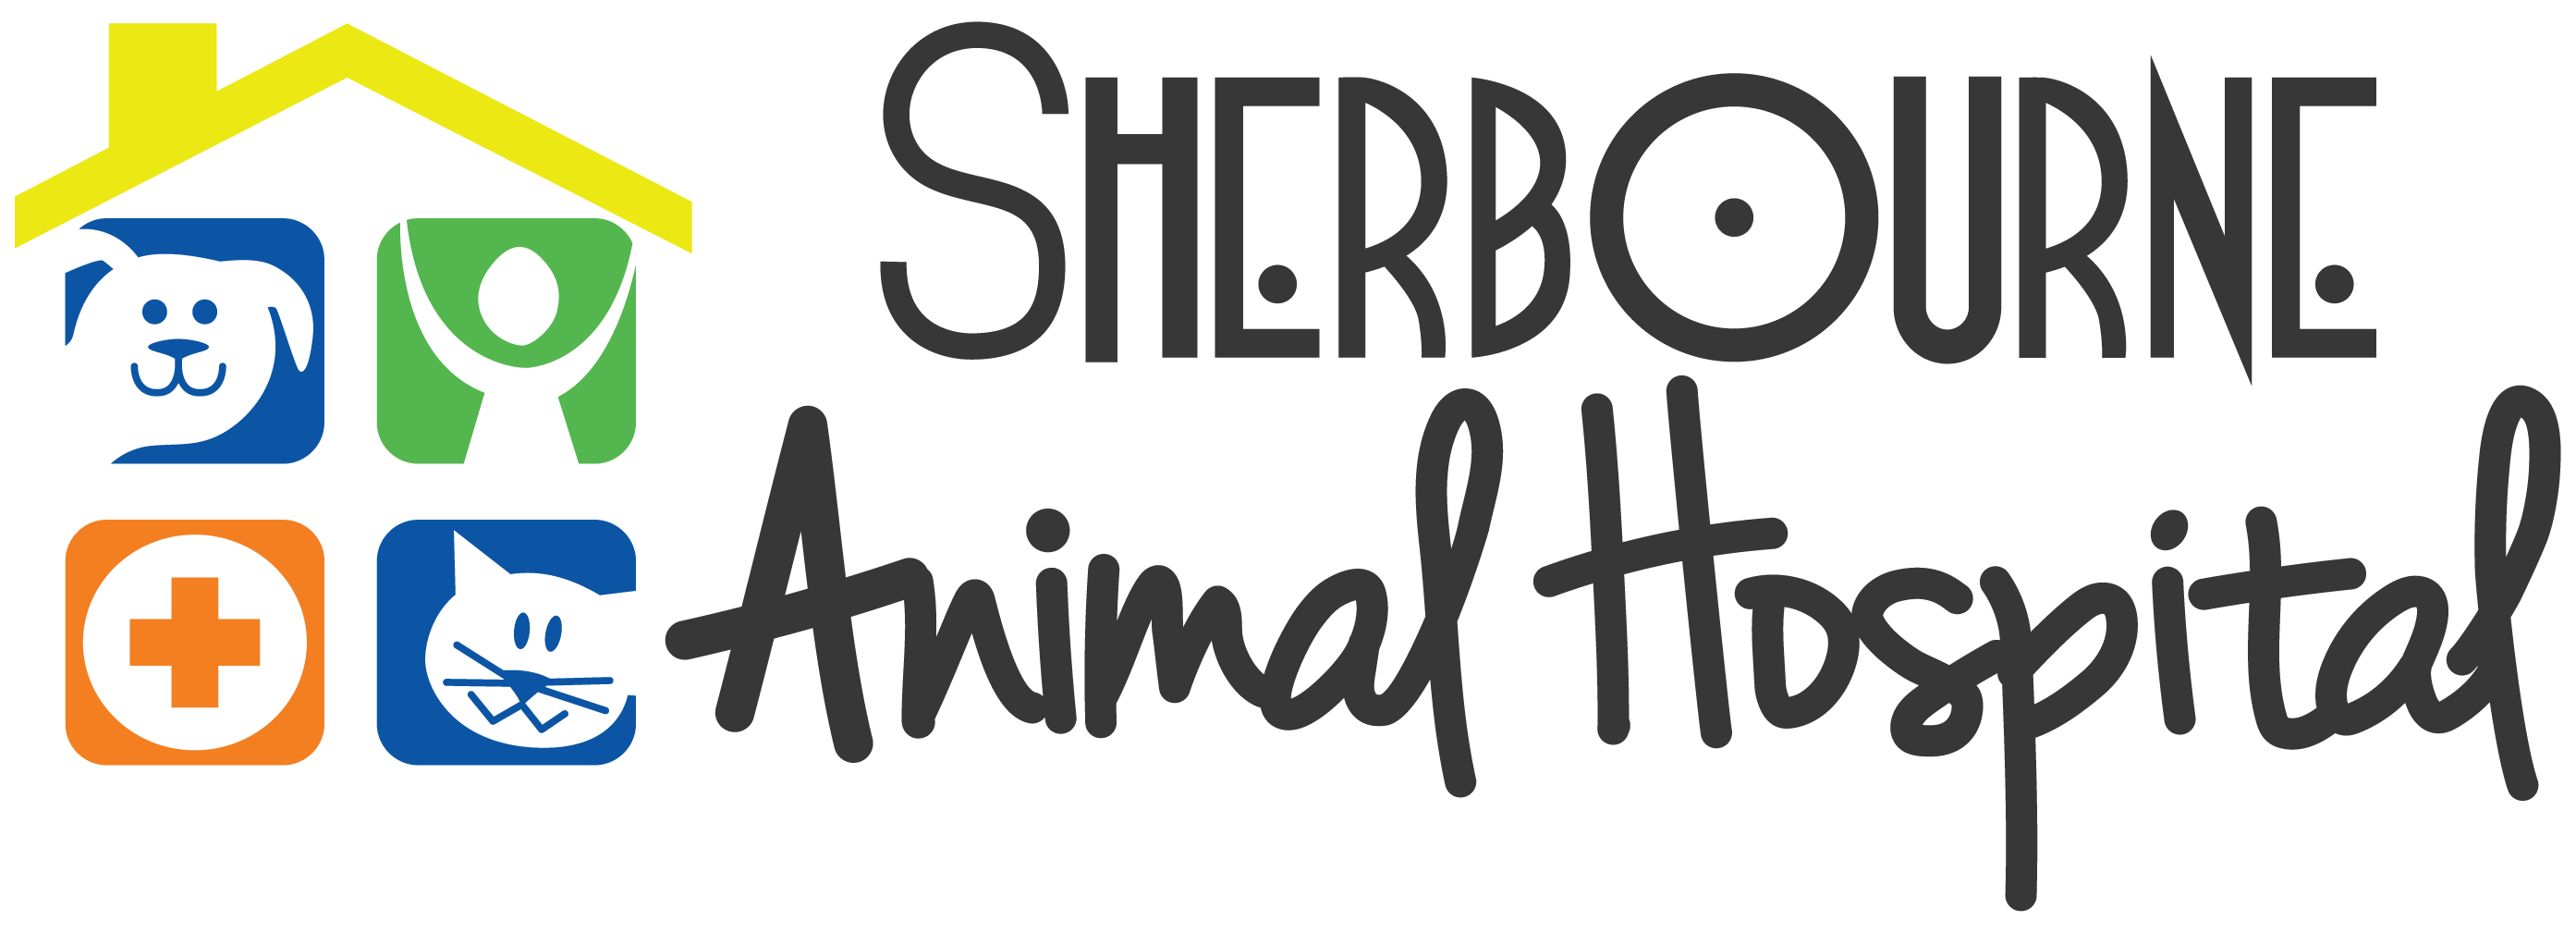 Sherbourne Animal Hospital: Veterinarian in Toronto, ON